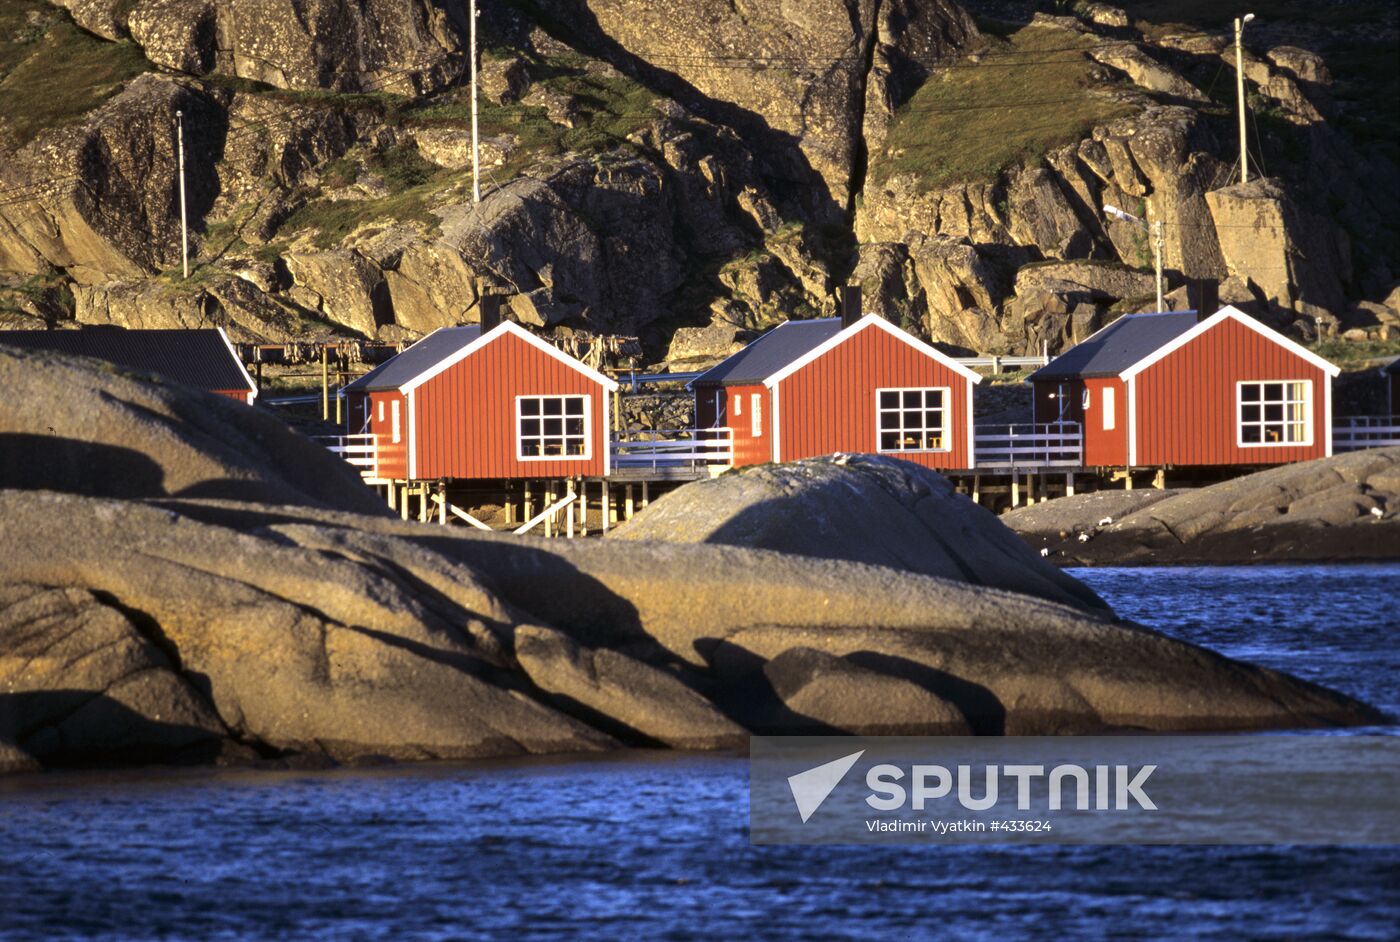 Fishermen's village on Lofoten island